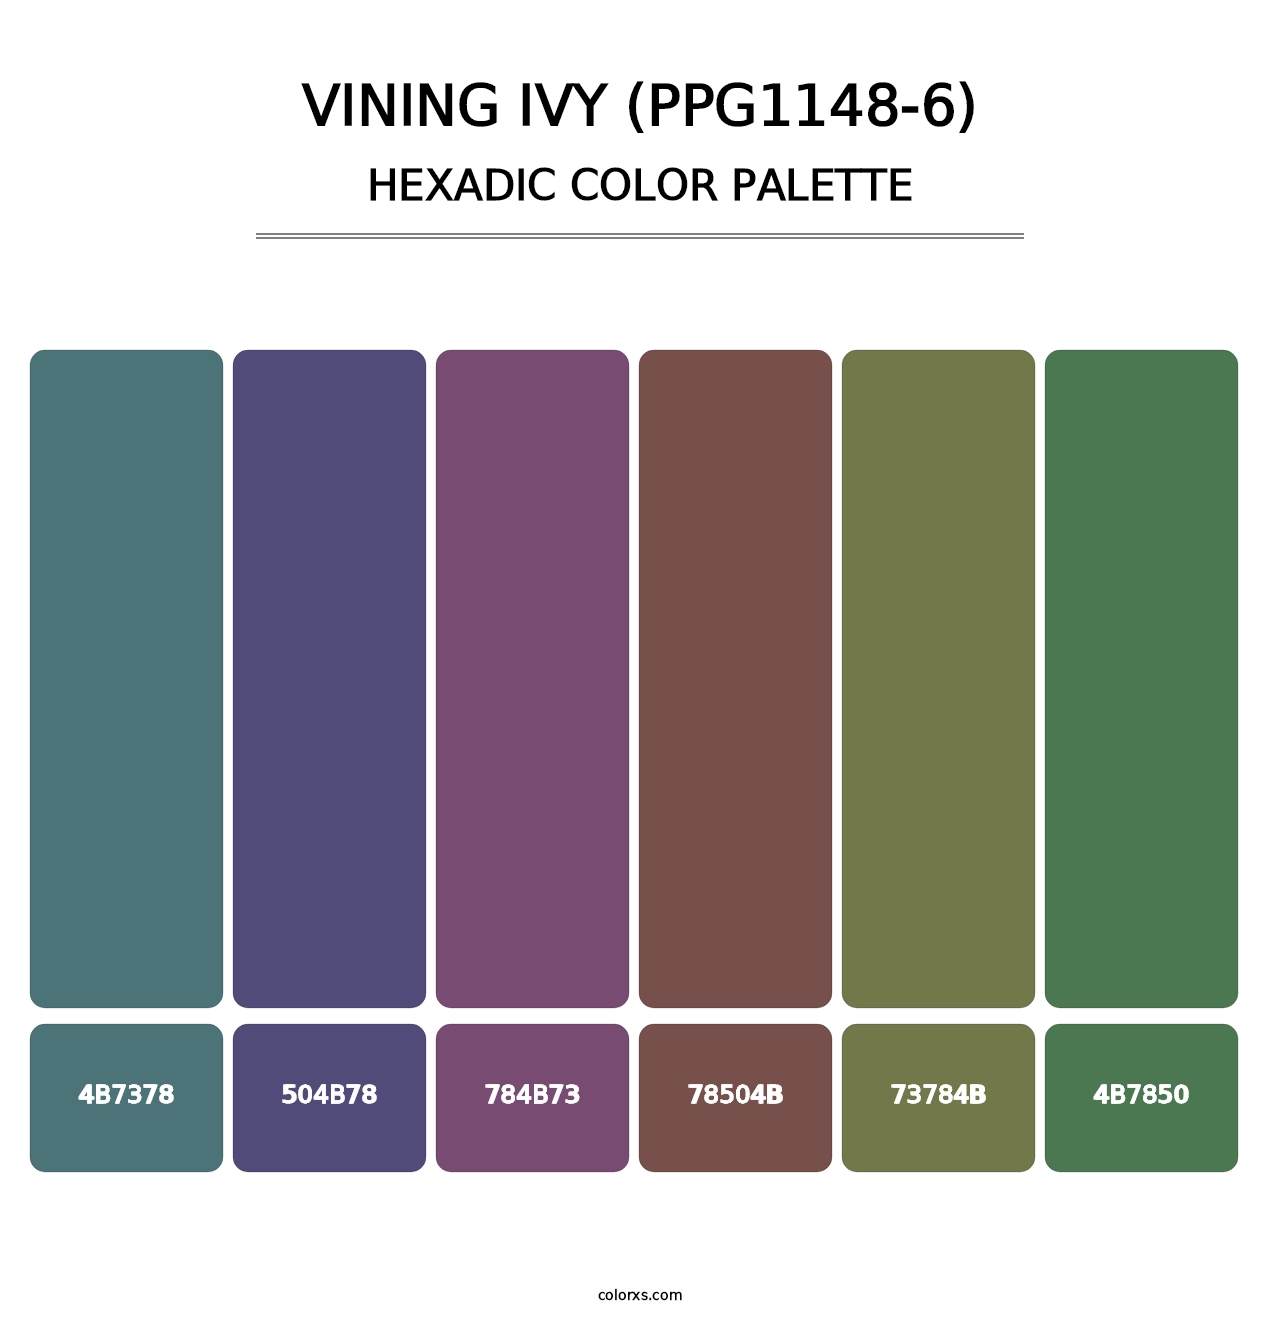 Vining Ivy (PPG1148-6) - Hexadic Color Palette